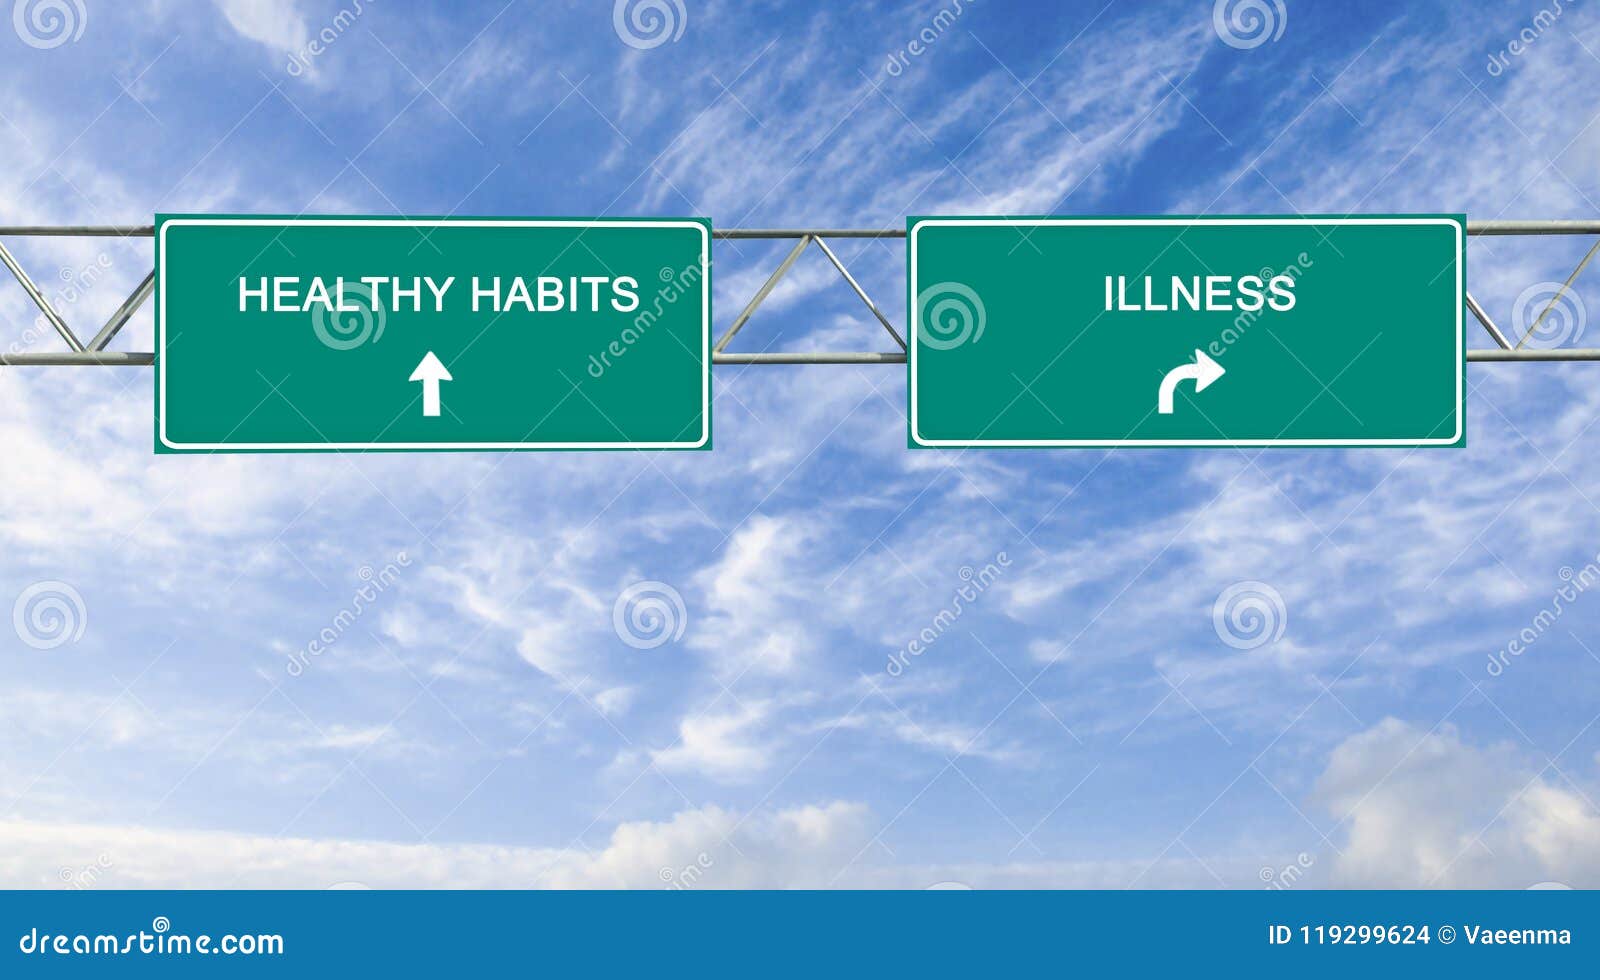 healthy habits and illness